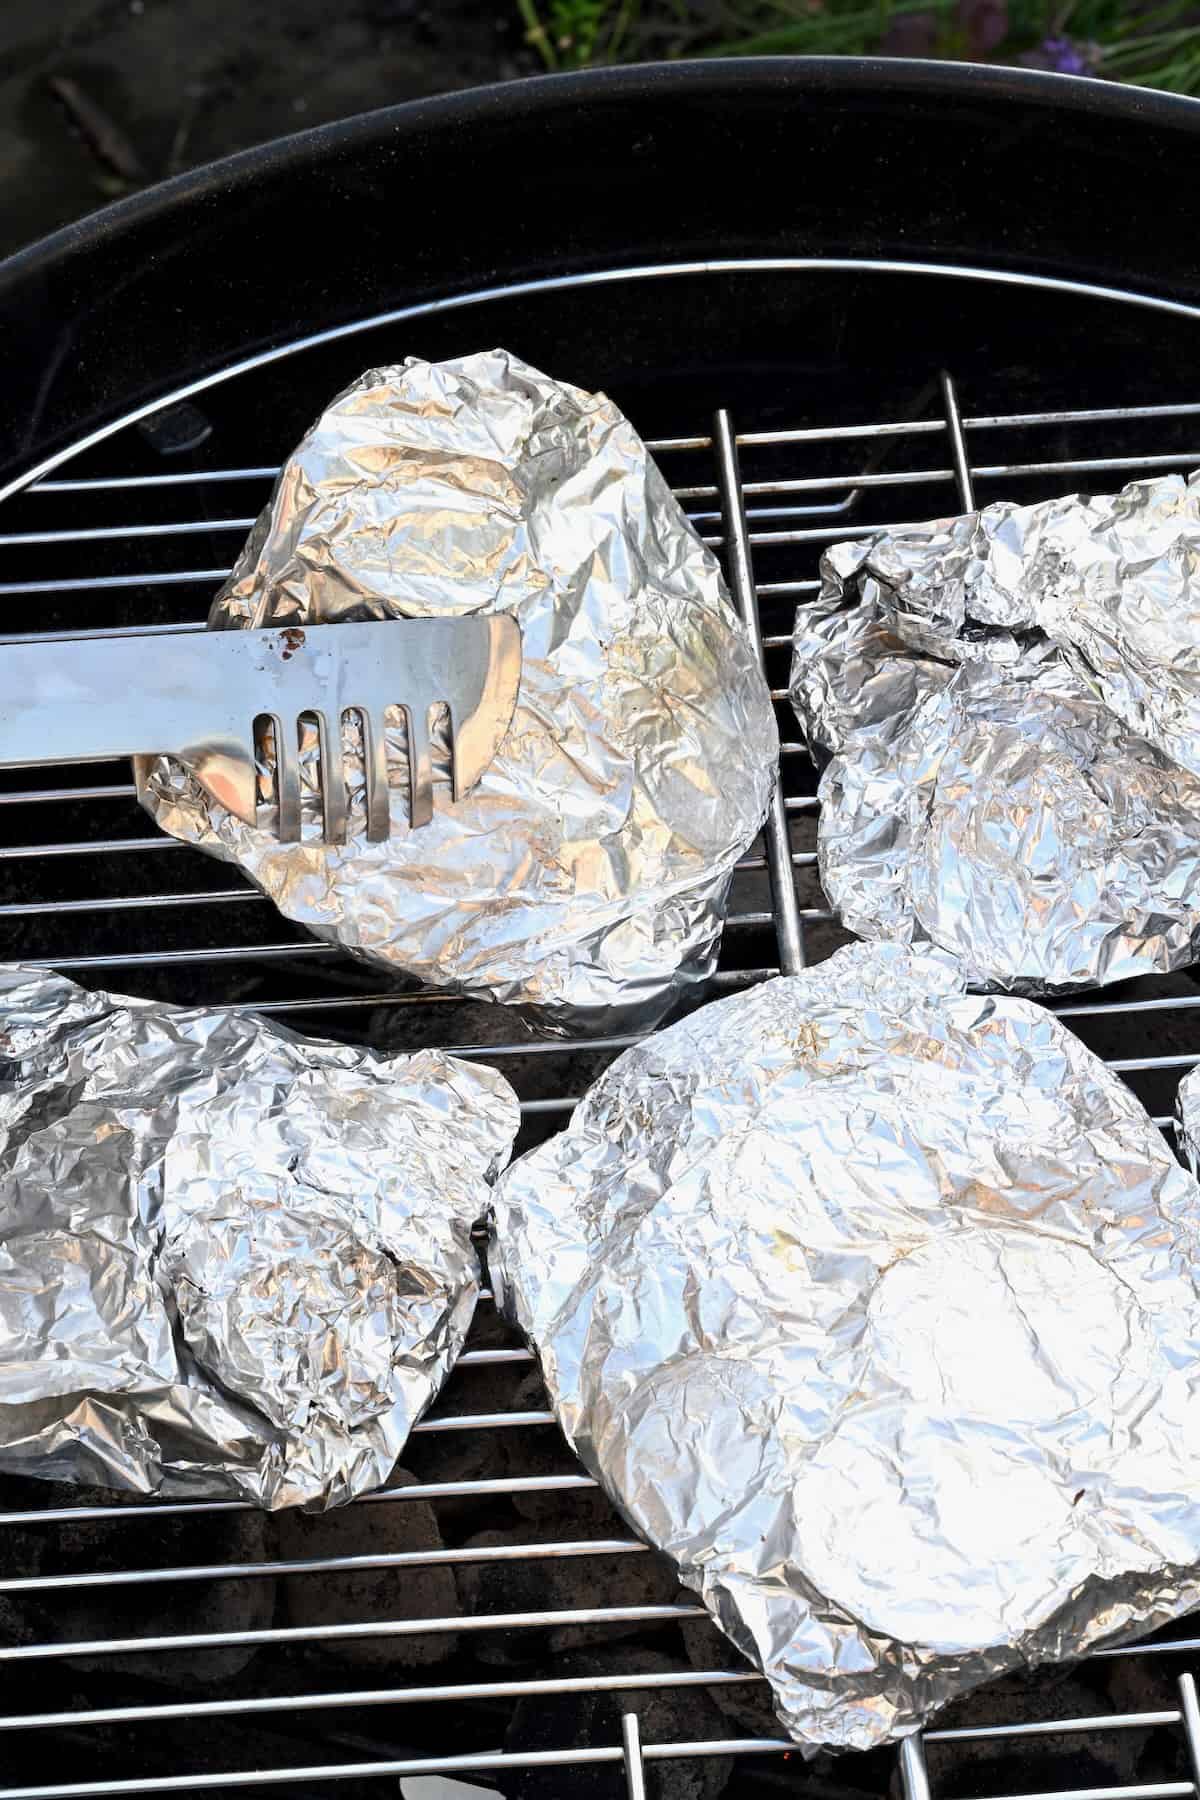 Grilling potatoes in foil